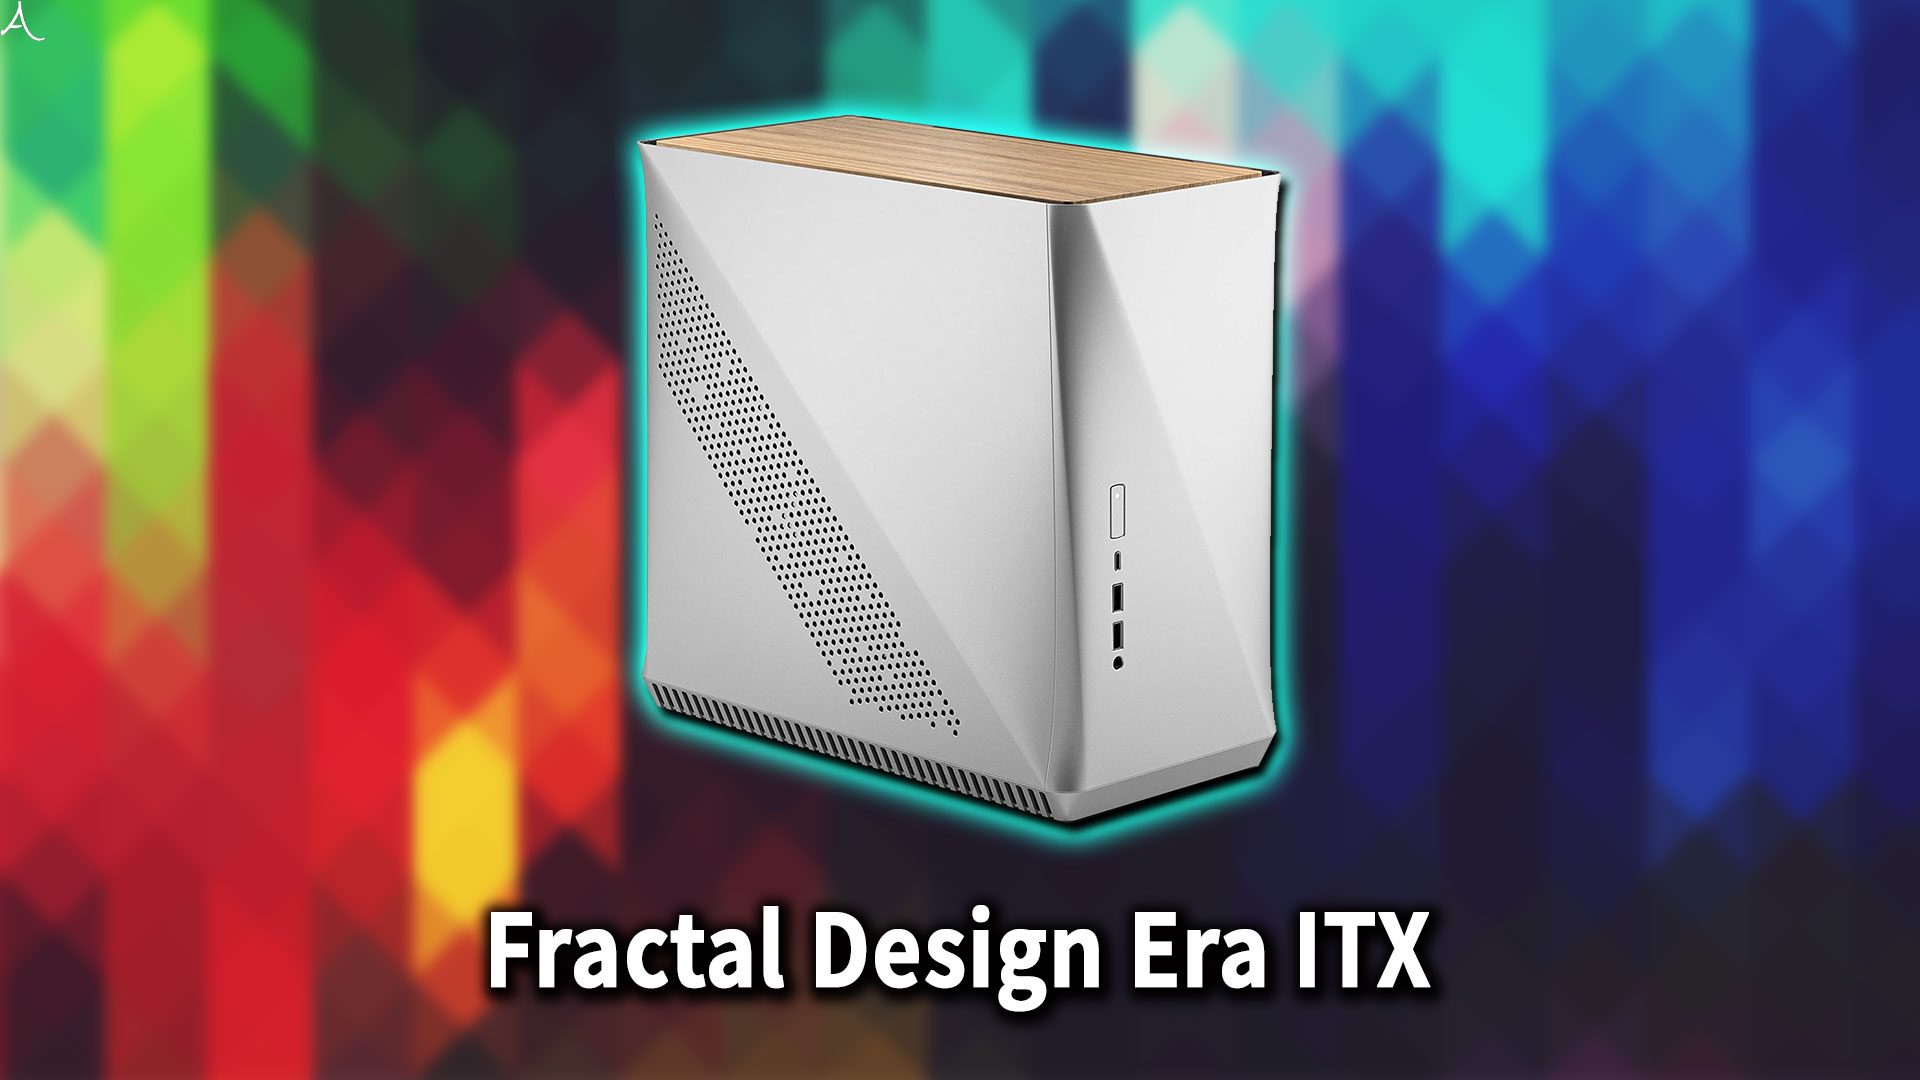 ｢Fractal Design Era ITX｣のサイズ・大きさはどれくらい？